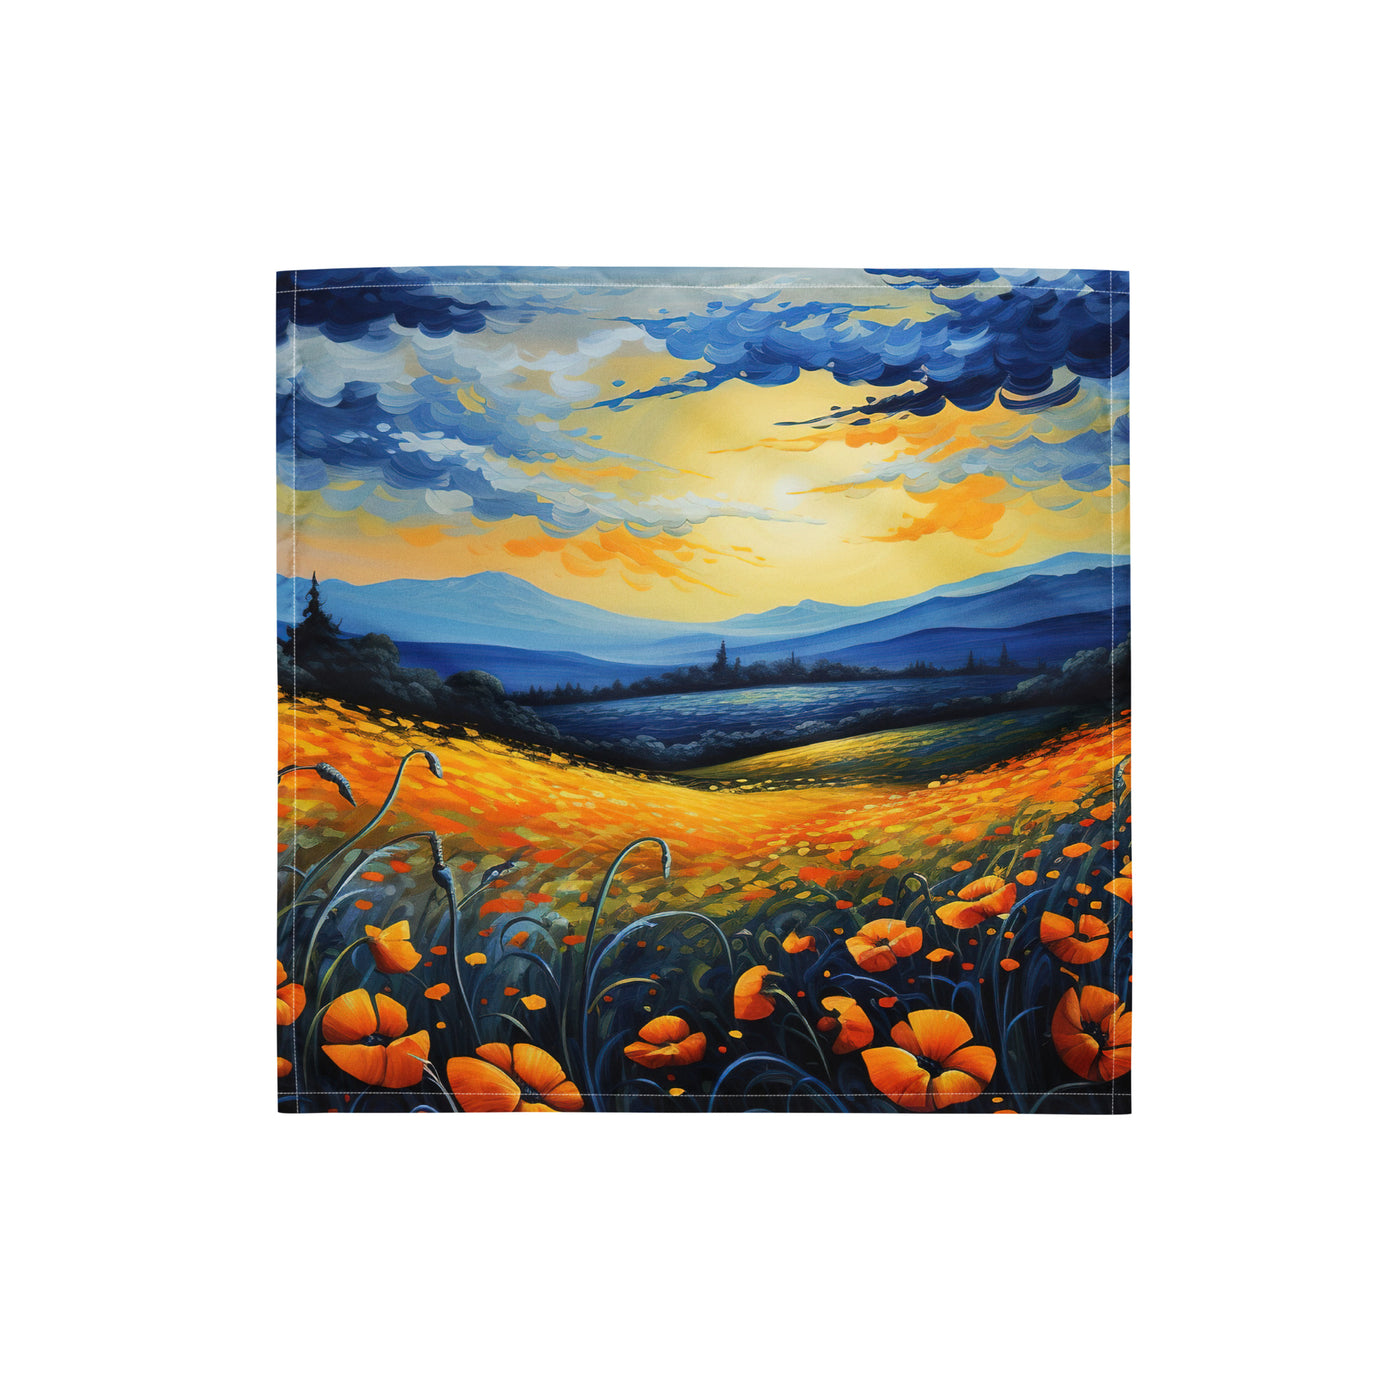 Berglandschaft mit schönen gelben Blumen - Landschaftsmalerei - Bandana (All-Over Print) berge xxx S